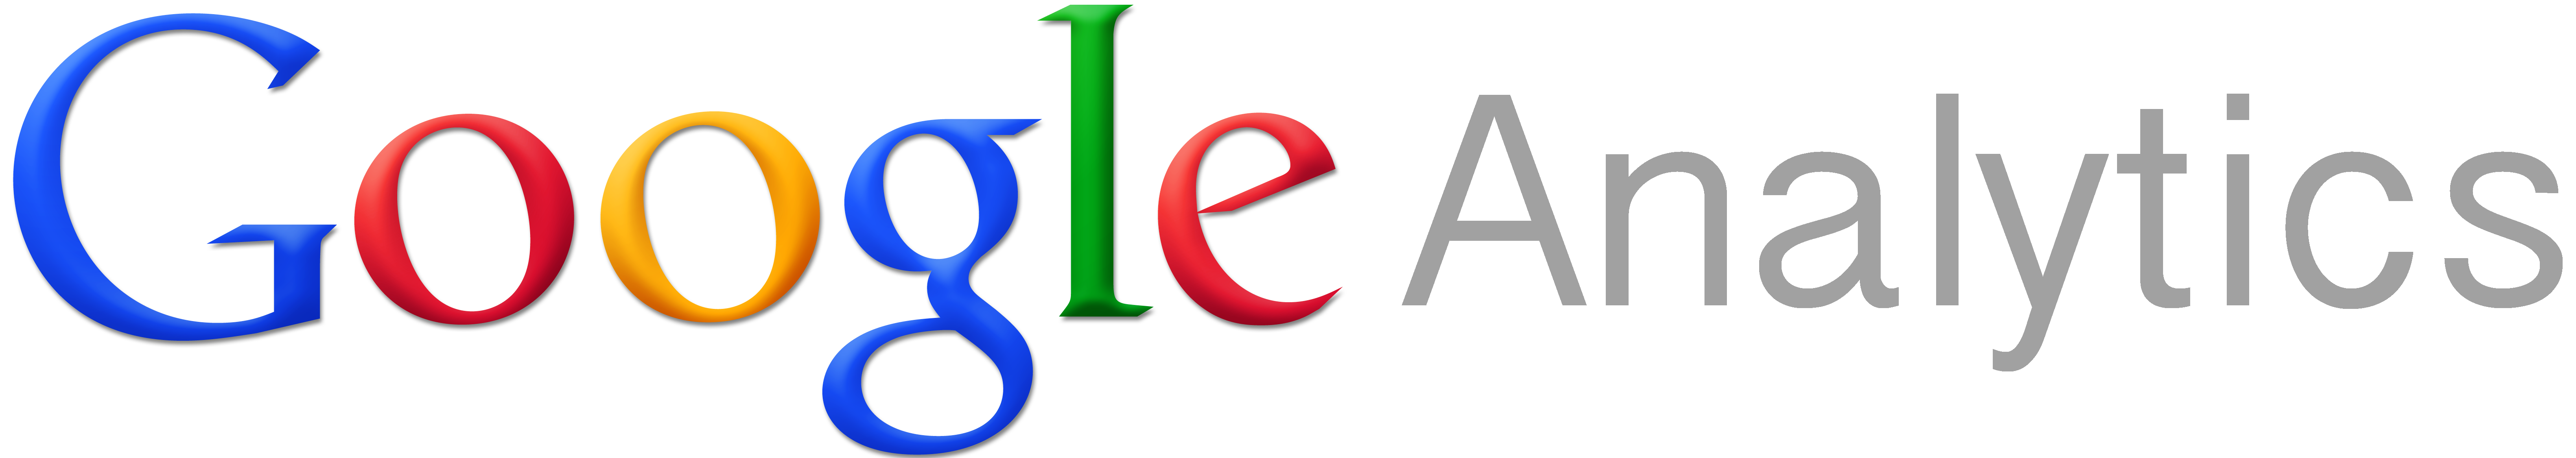 Google Analytics 2014 Logo photo - 1